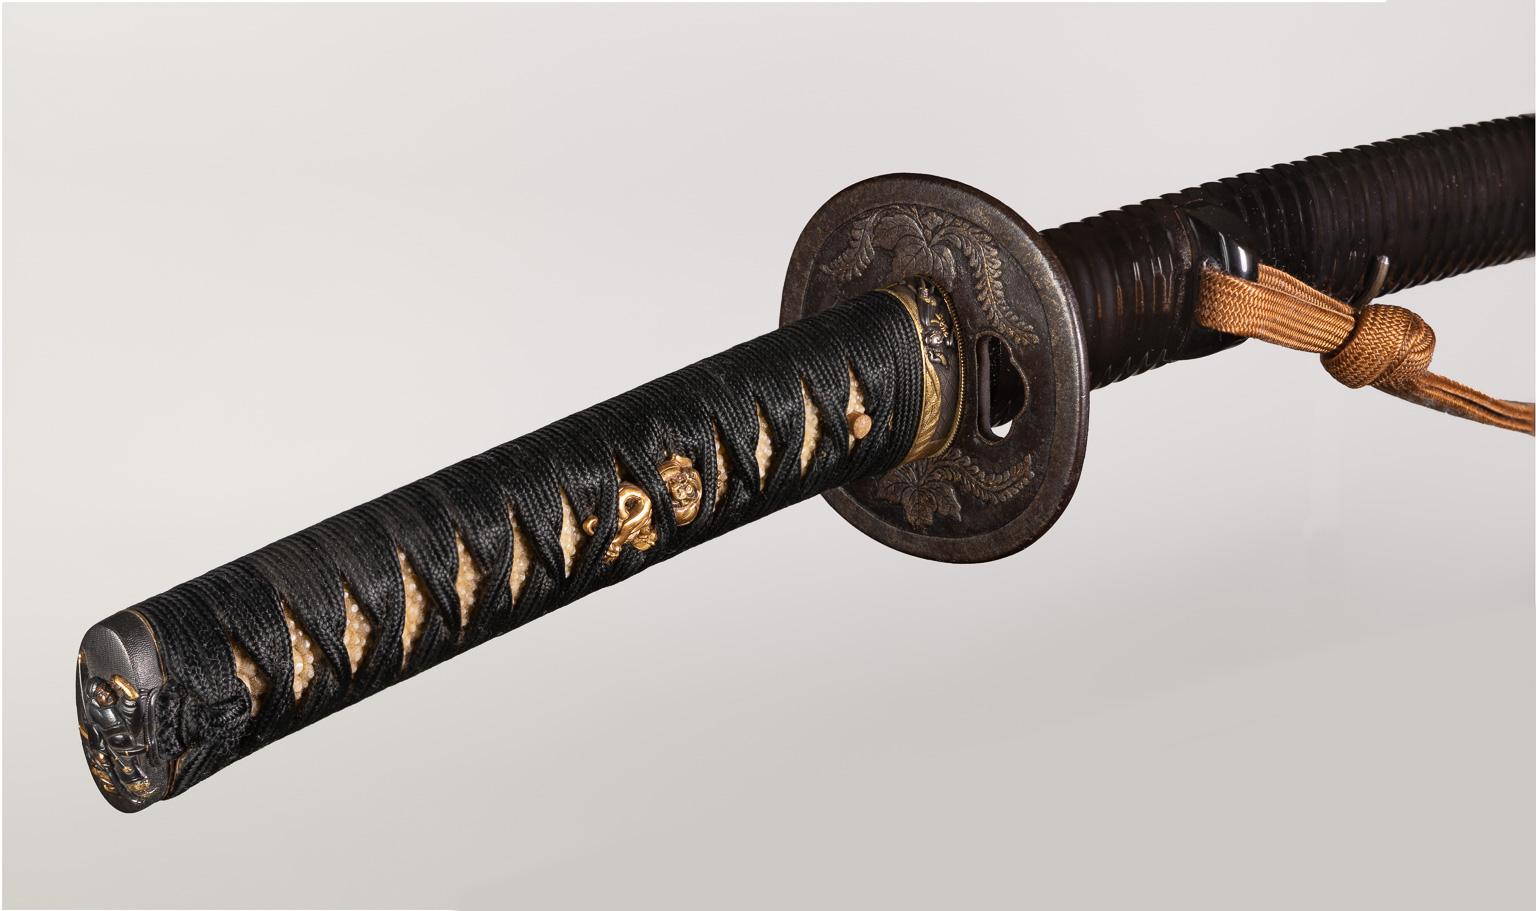 Steel Japanese Sword, Katana Named “Yakumo”, NBTHK Jūyō Tōken, 14th Century